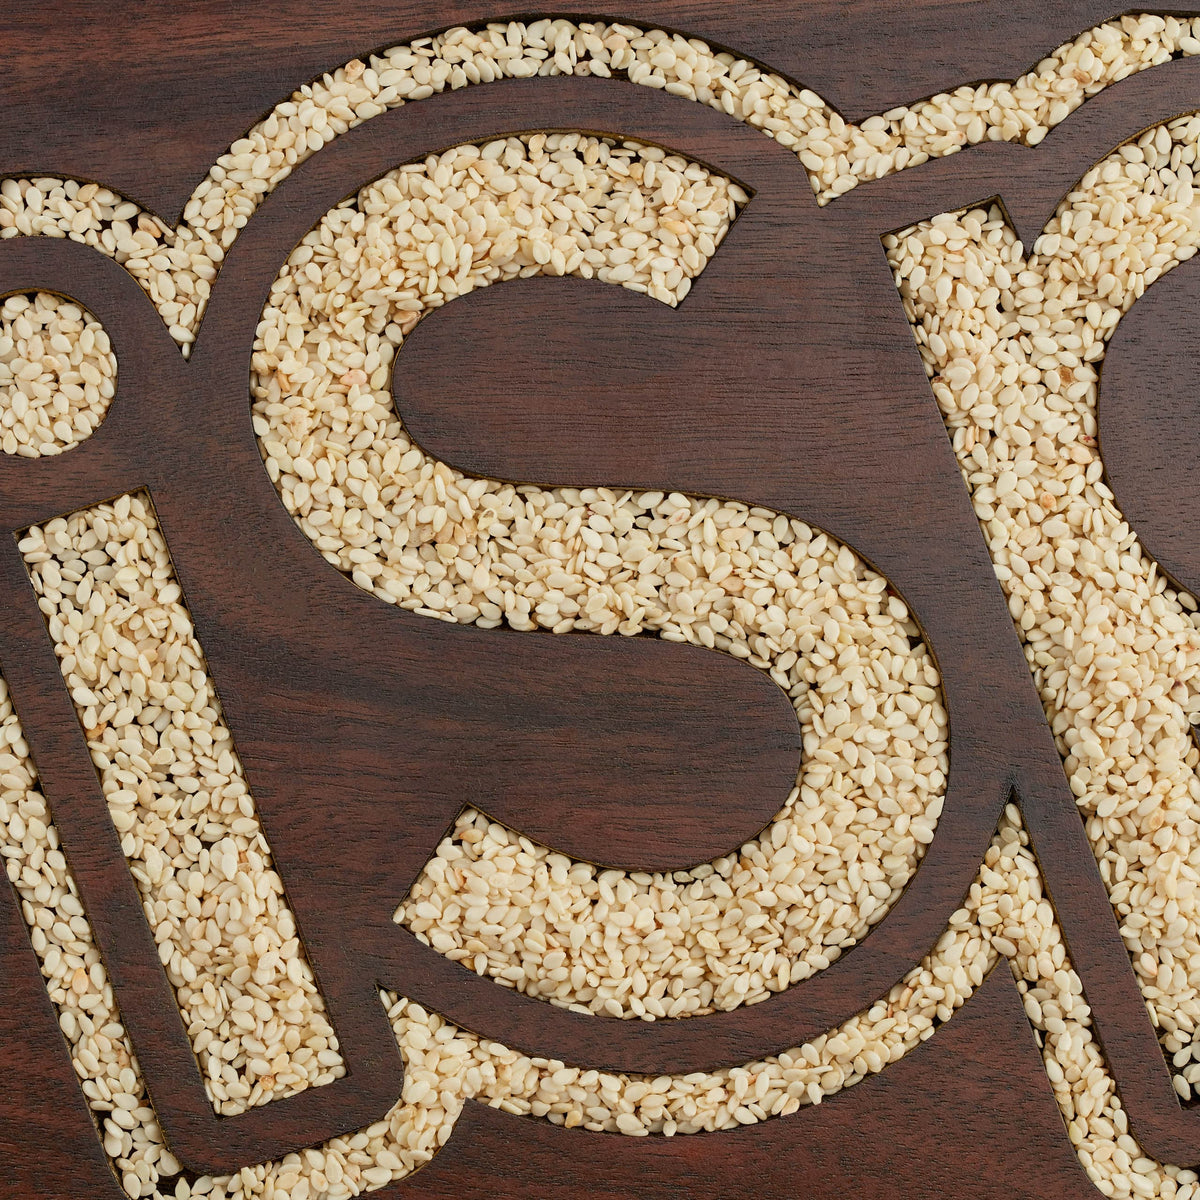 7 Surprising Benefits of Organic Sesame Seeds